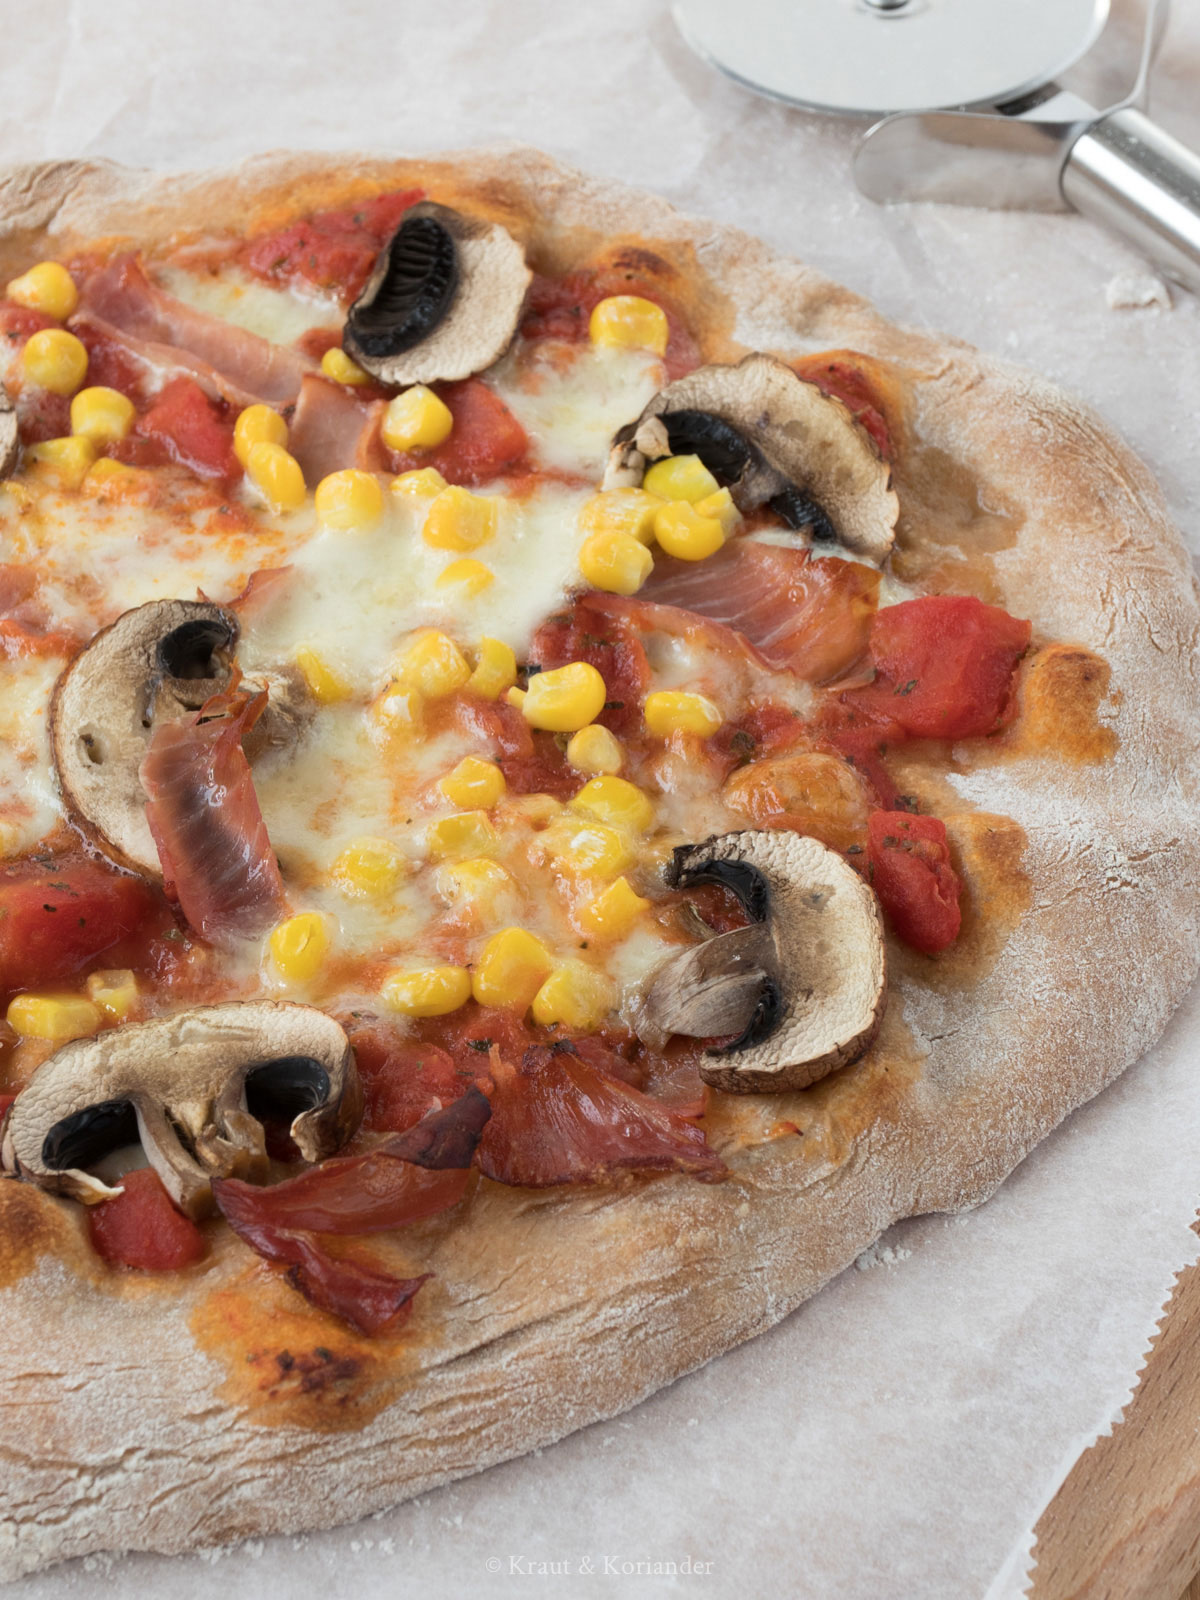 Genial knusprige Slow Food Pizza